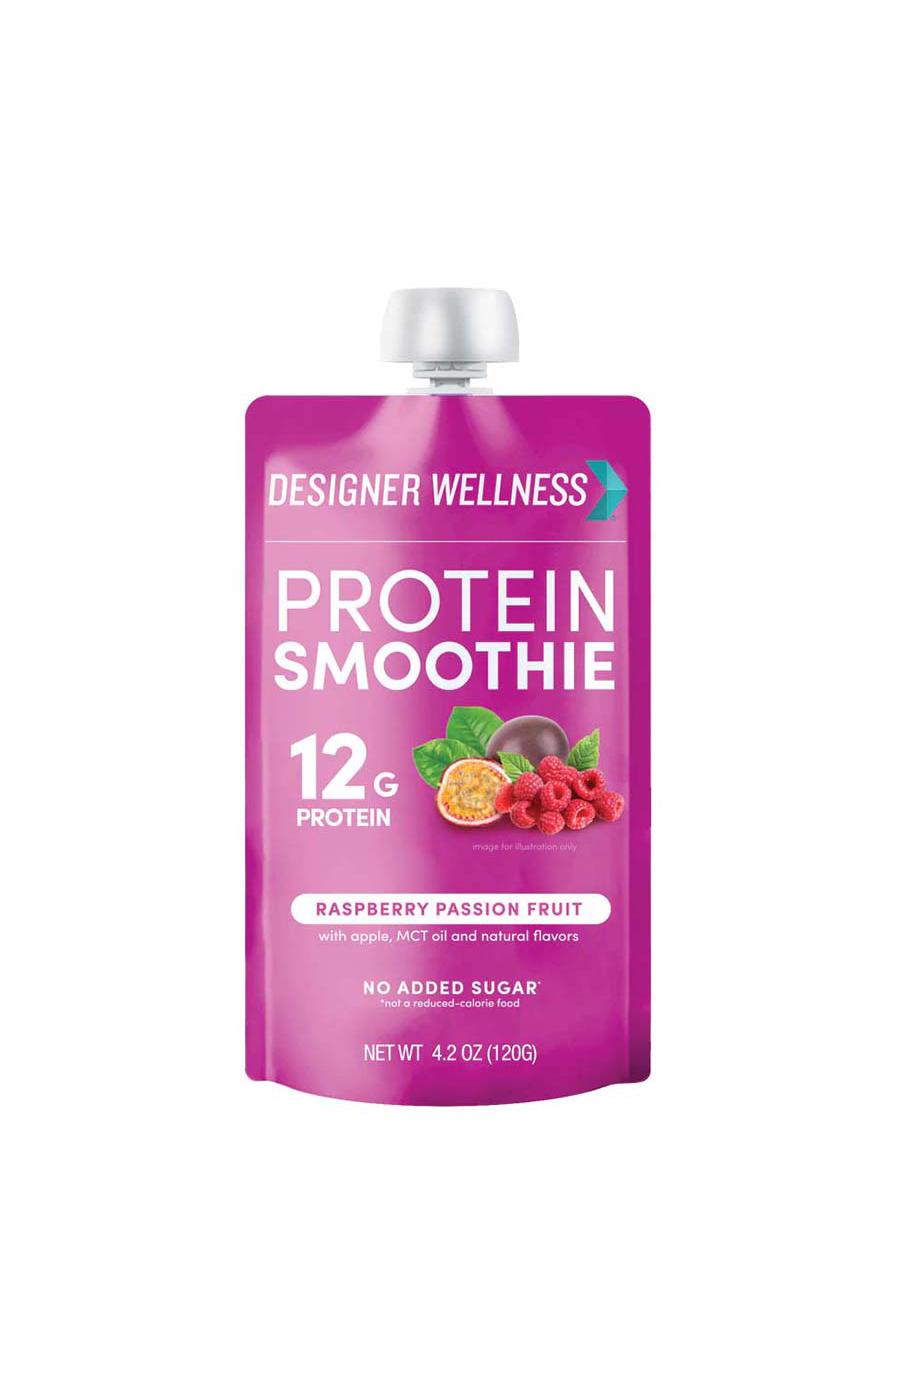 Designer Wellness Protein Smoothie - Raspberry Passion Fruit; image 1 of 2